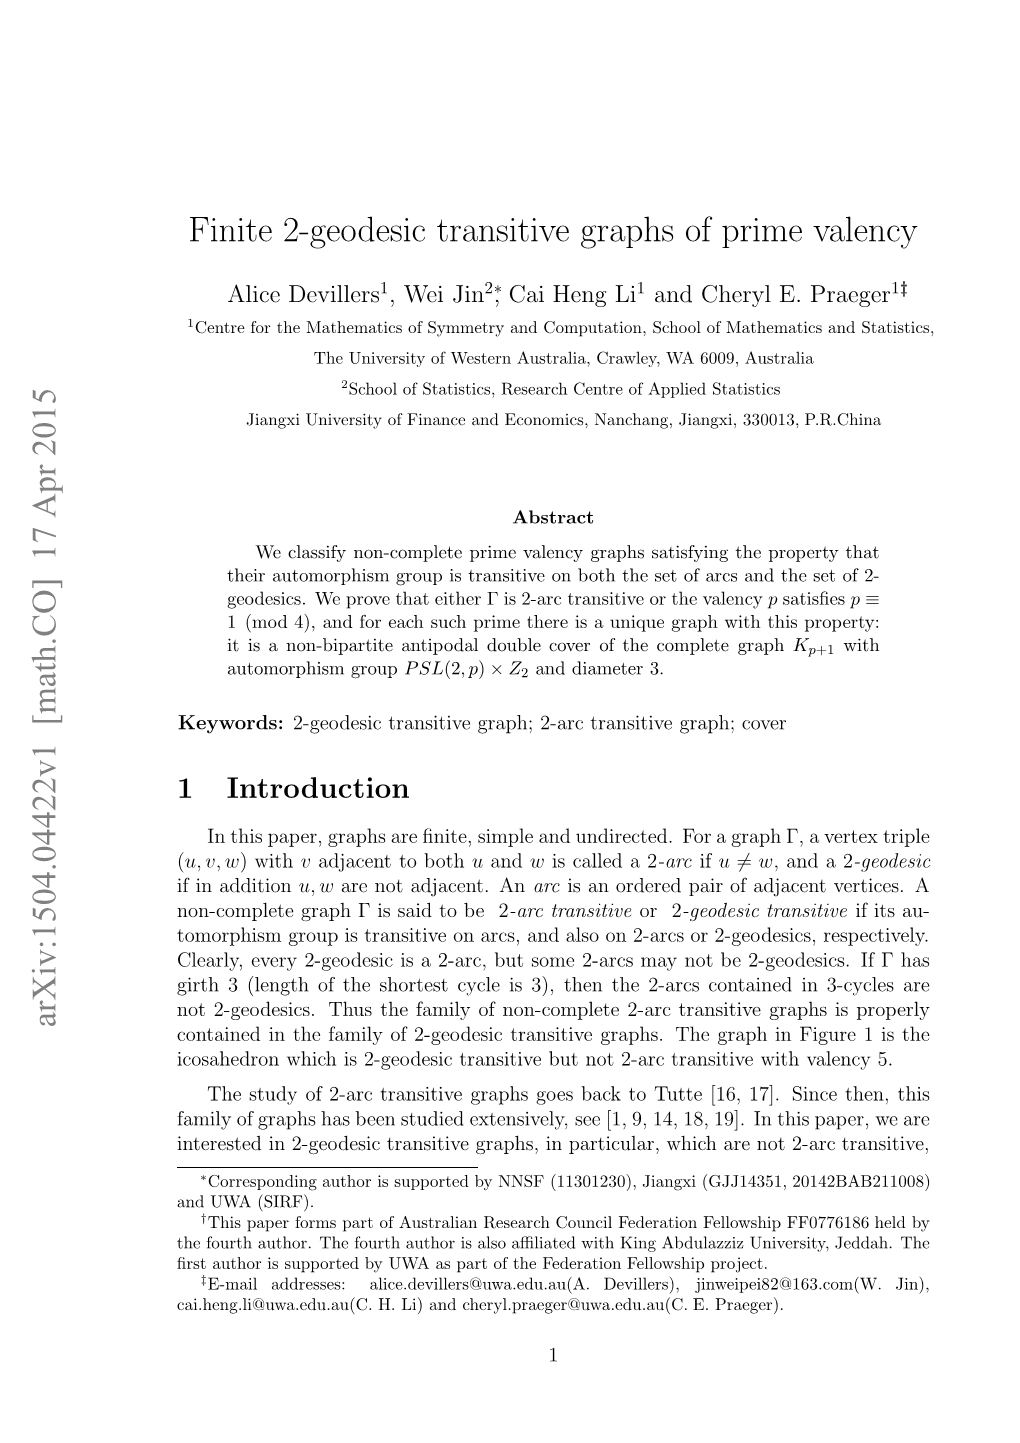 Finite 2-Geodesic Transitive Graphs of Prime Valency